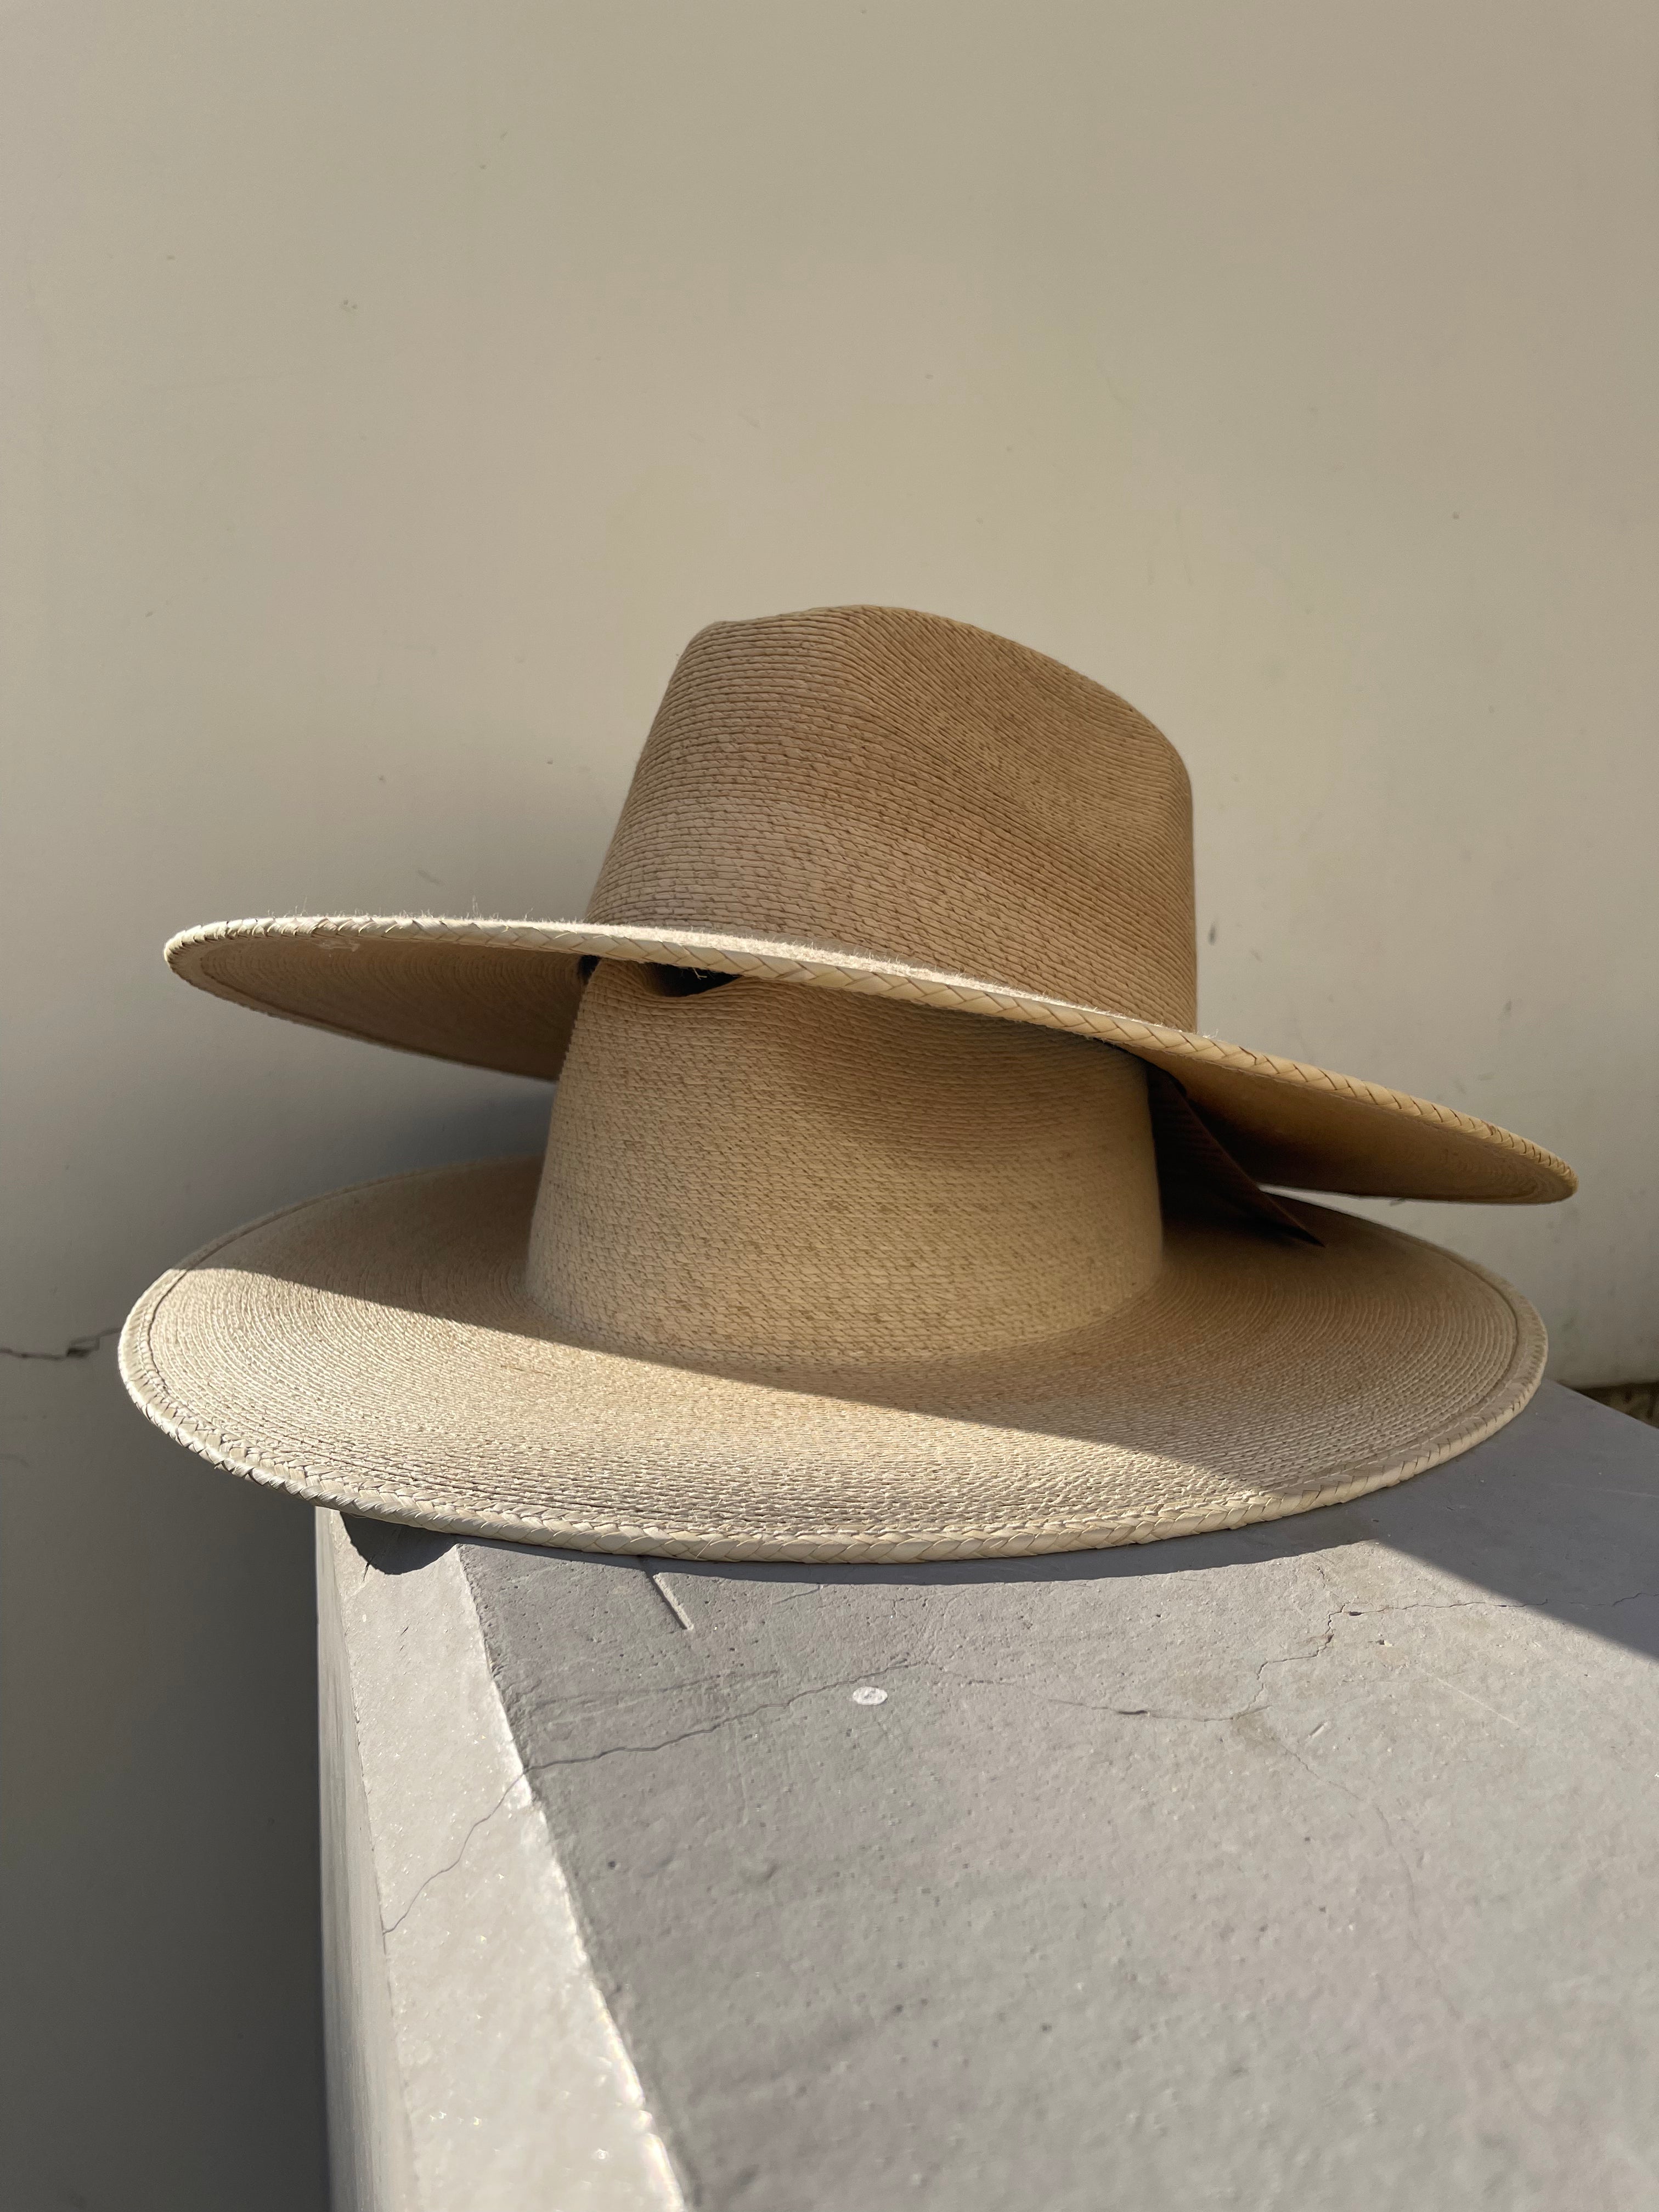 The Suntoasted Fine Palm Rancher Hat